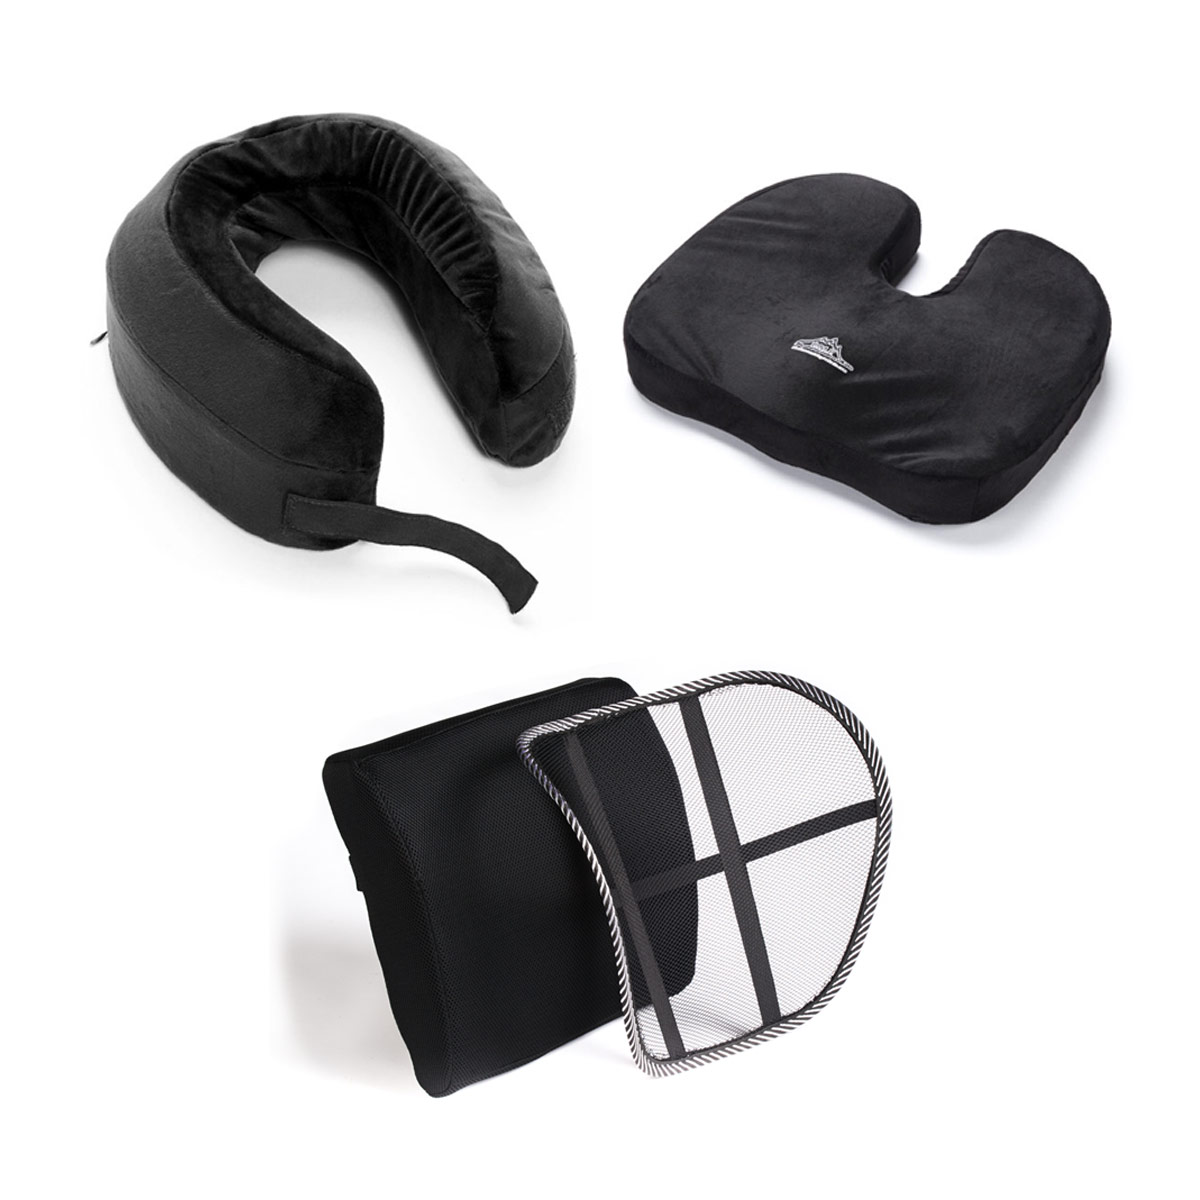 https://blackmountainproducts.com/wp-content/uploads/2018/11/Black-Pillow-Black-Seat-Black-Back-Cushion.jpg